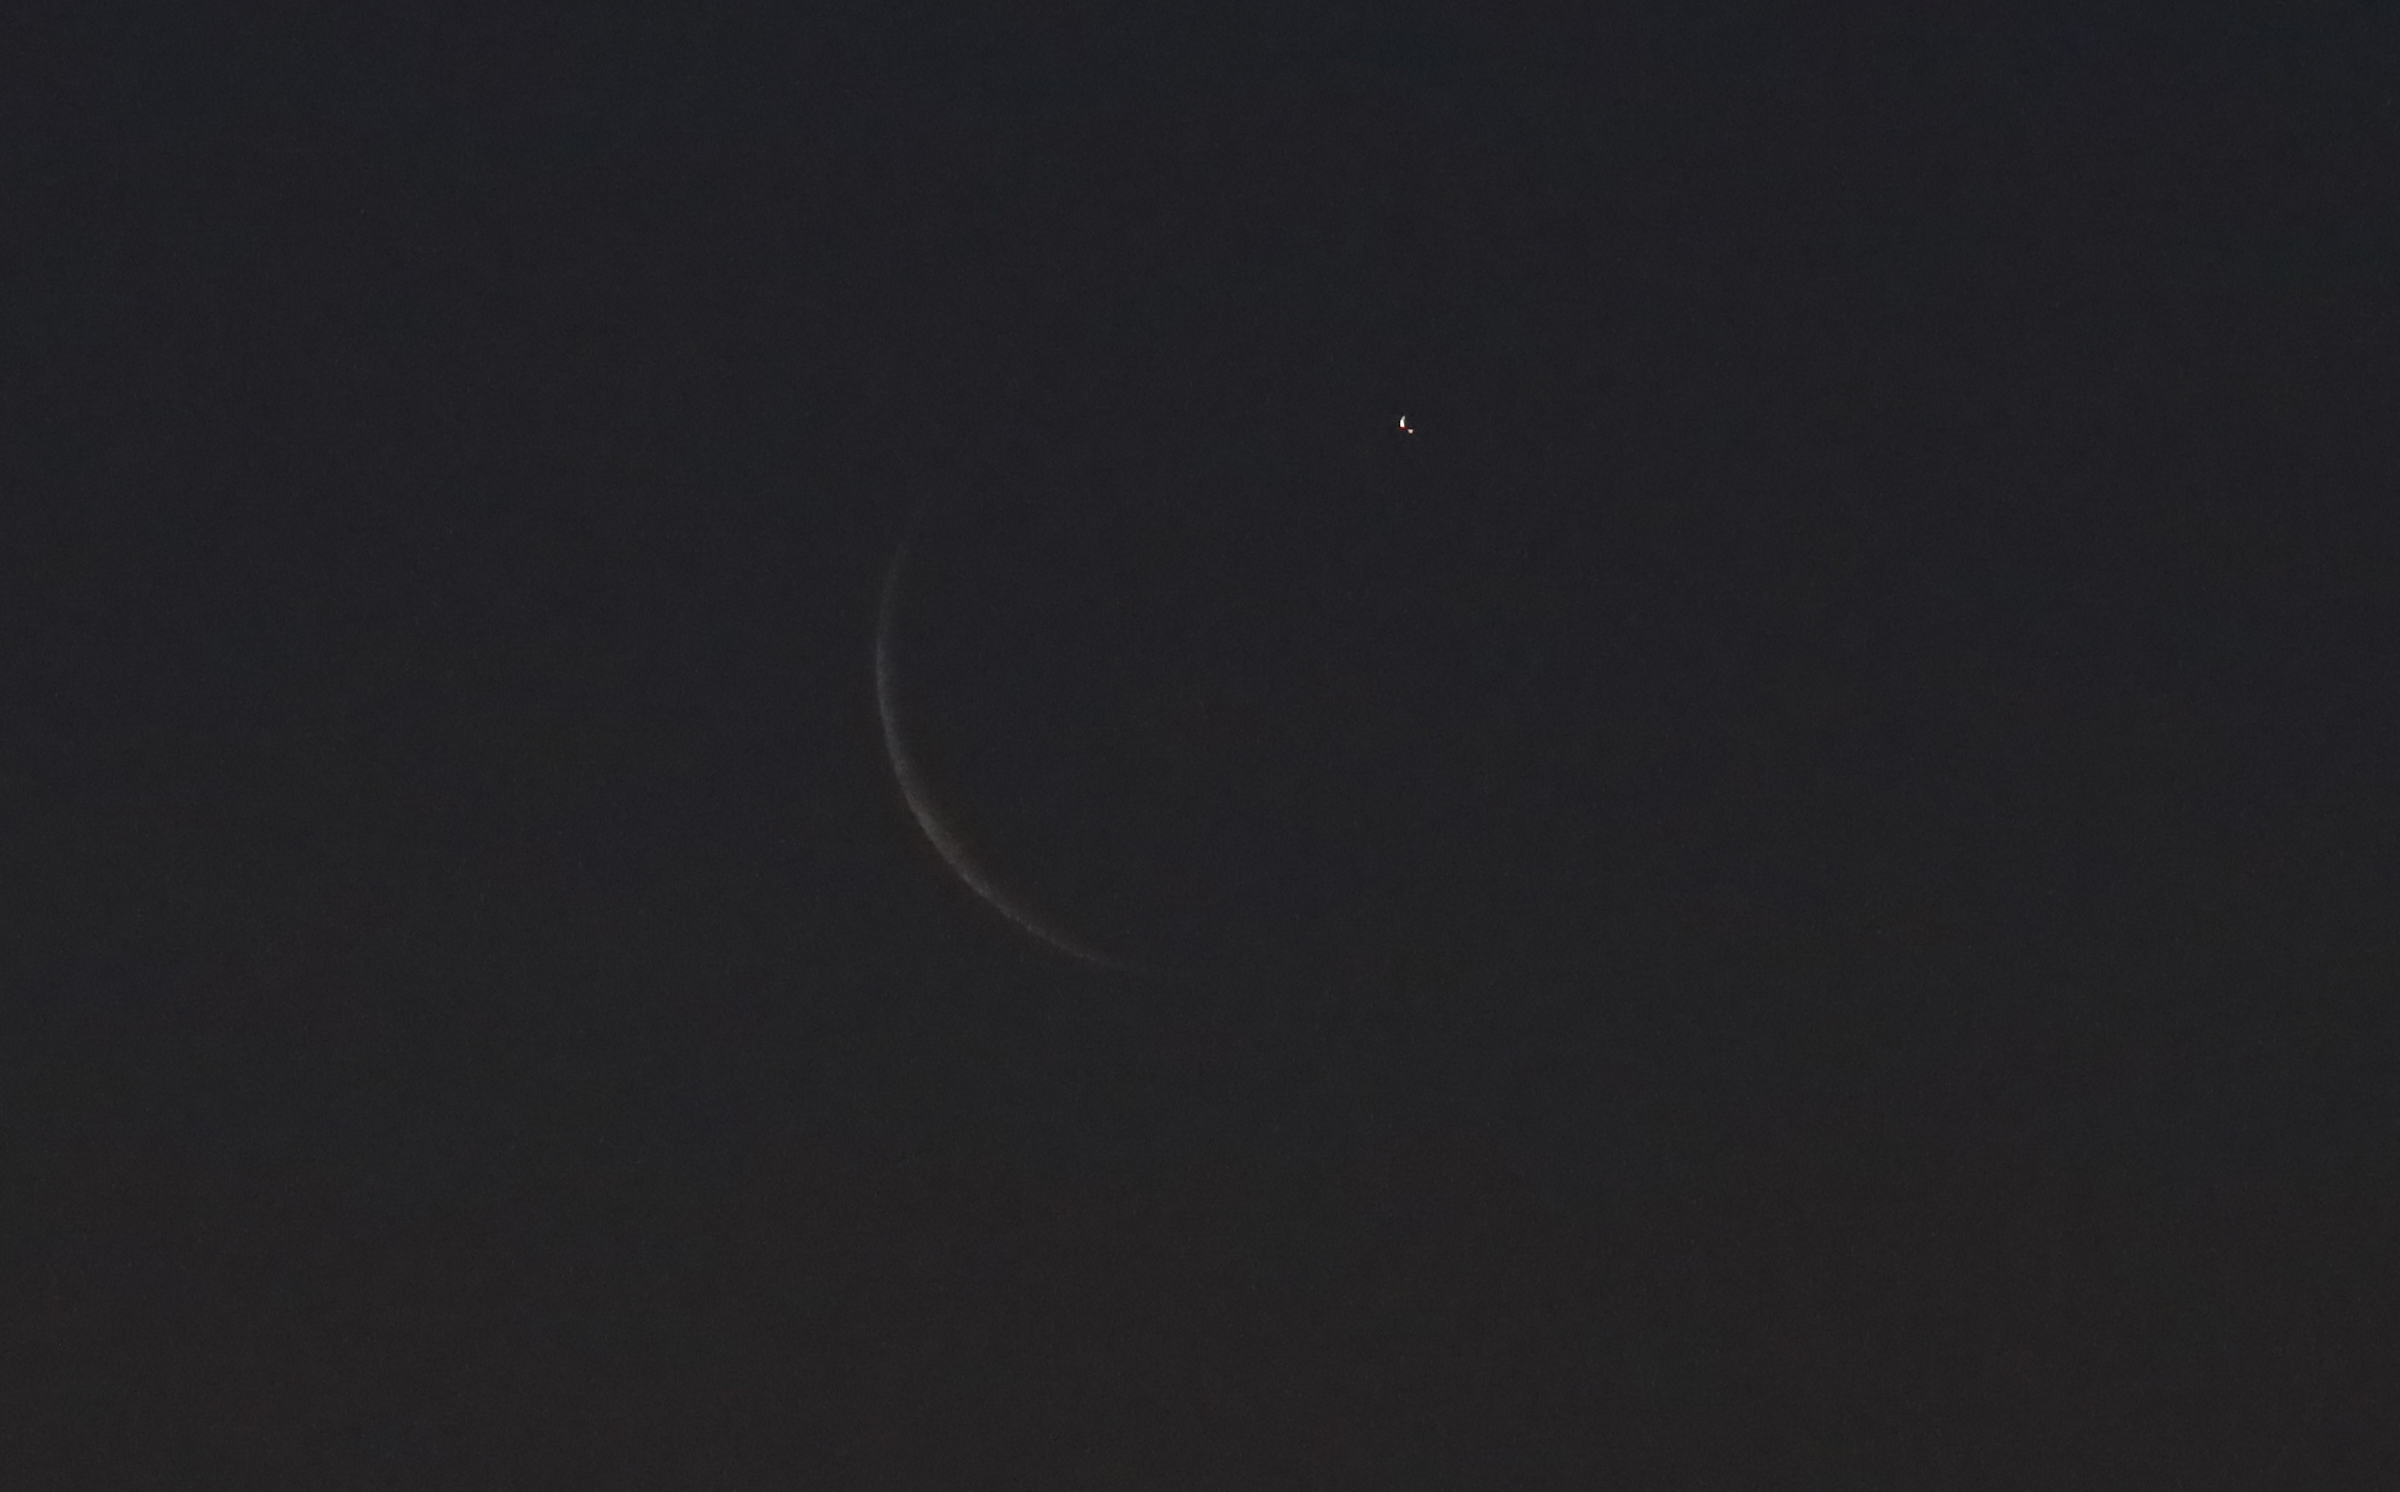 23 - Venus and Moon